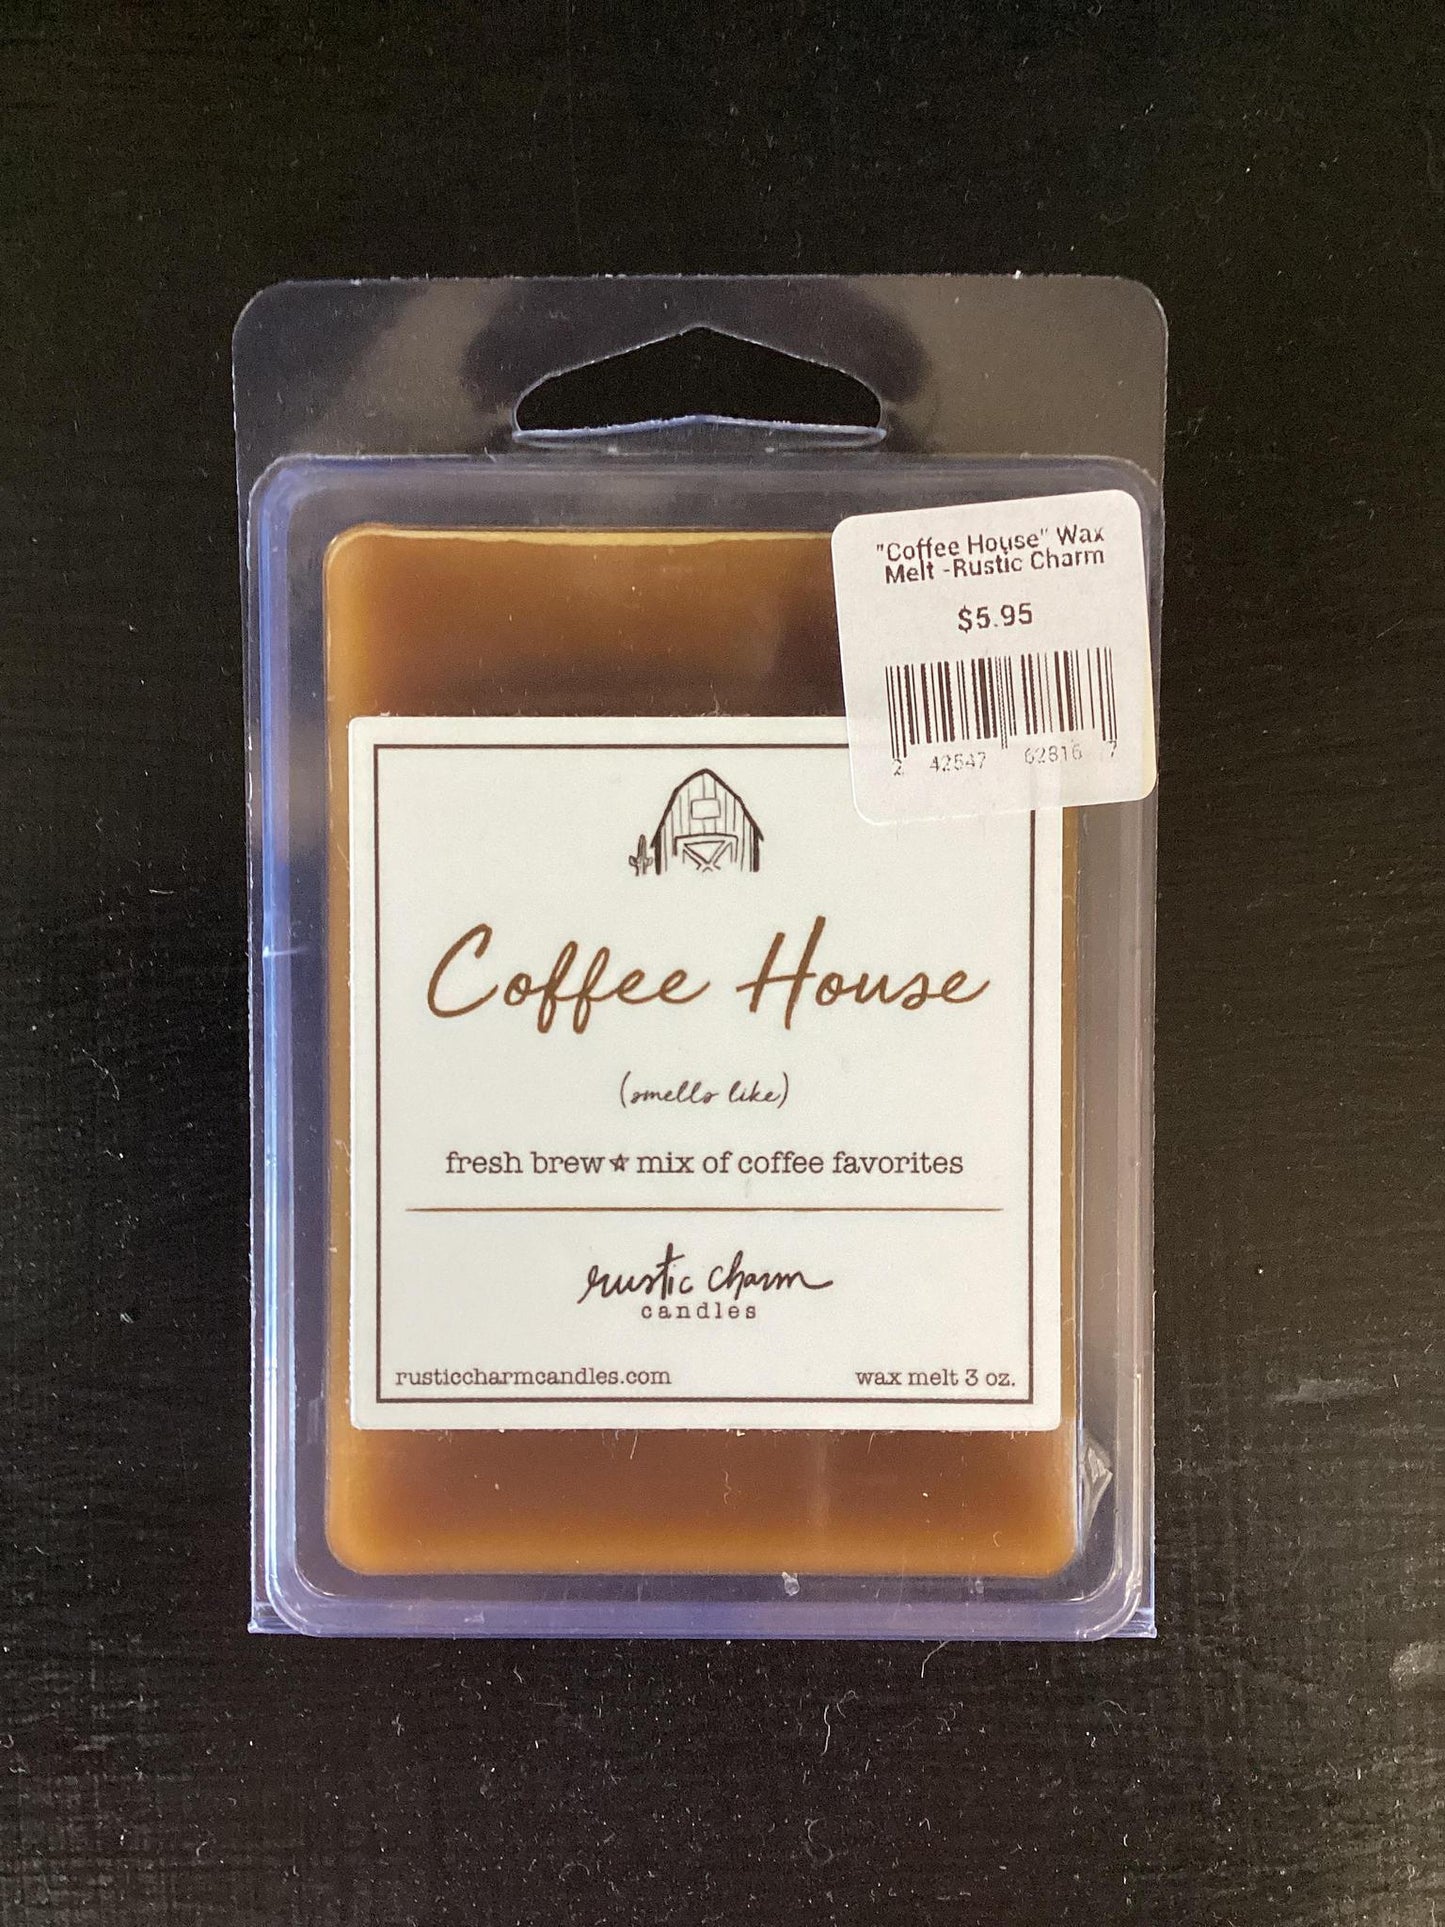 "Coffee House" Wax Melt -Rustic Charm